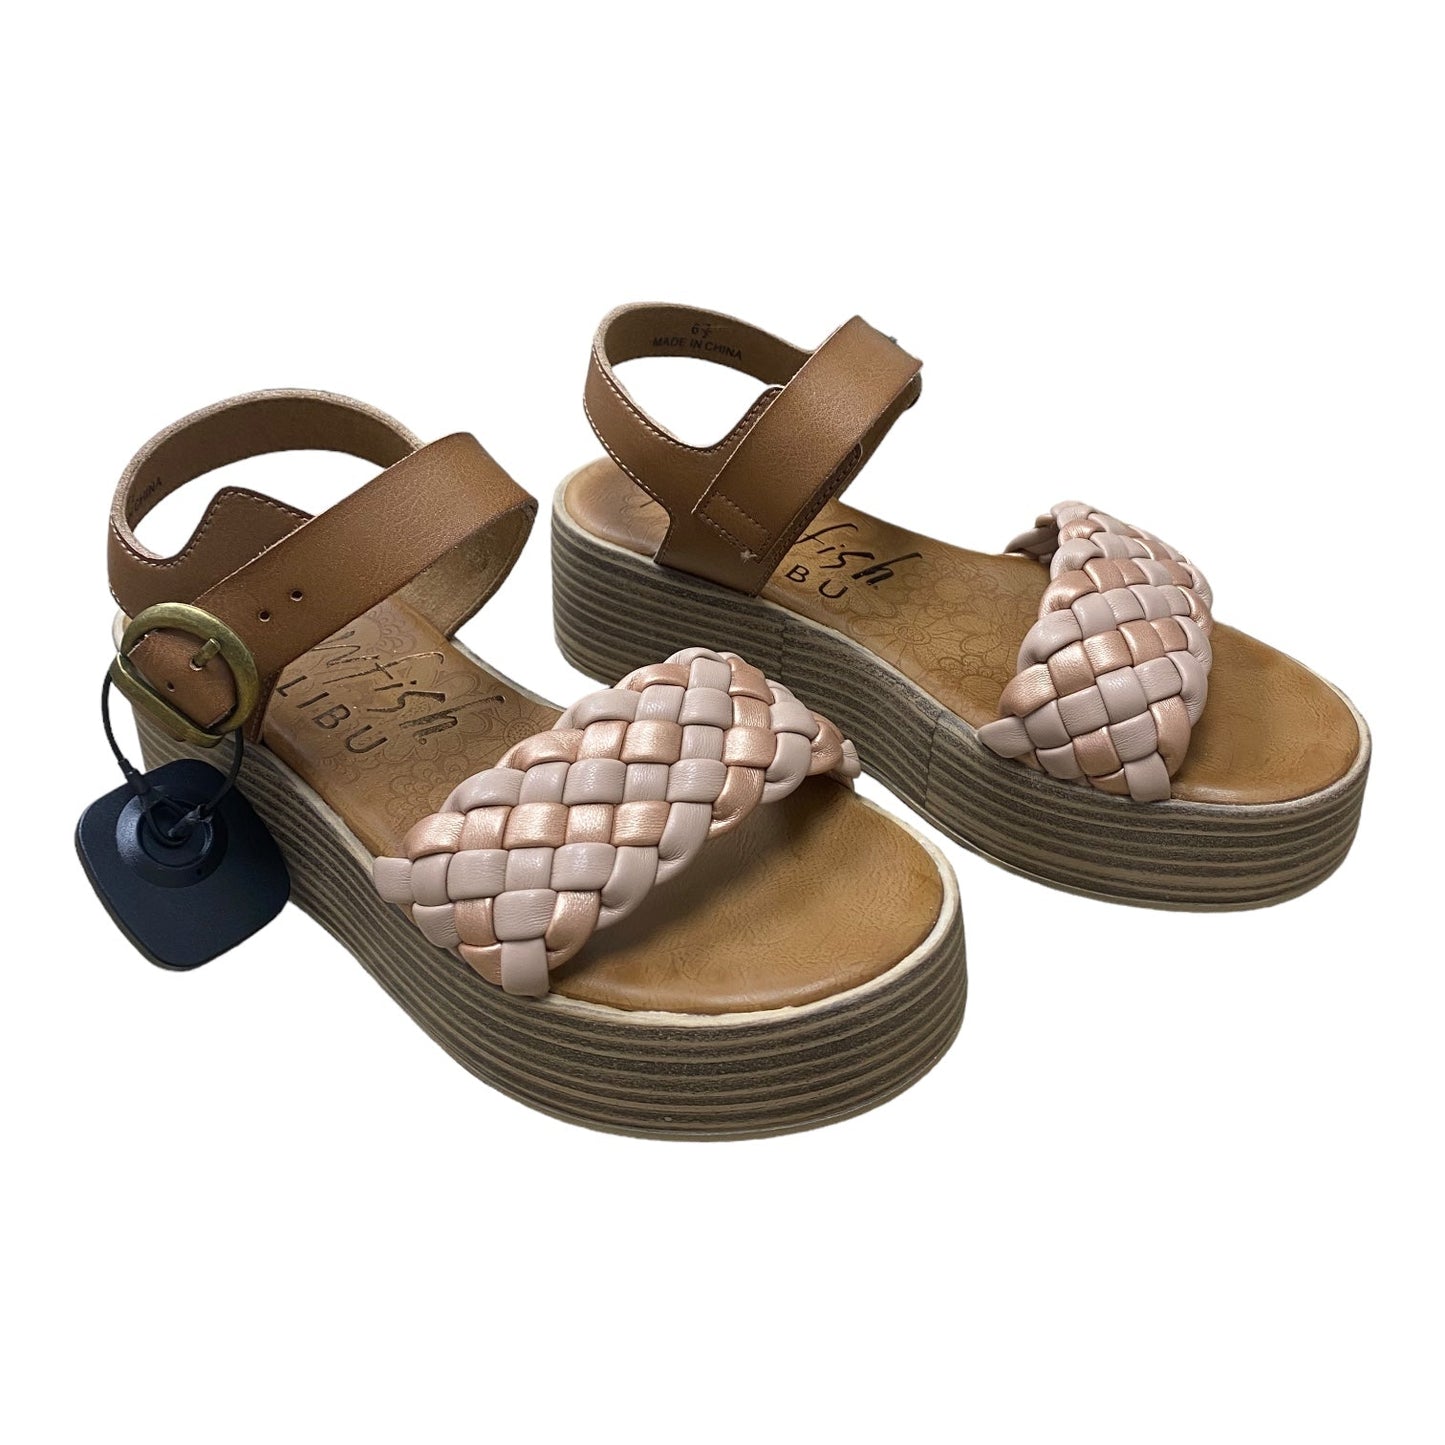 Pink & Tan Sandals Heels Platform Blowfish, Size 6.5